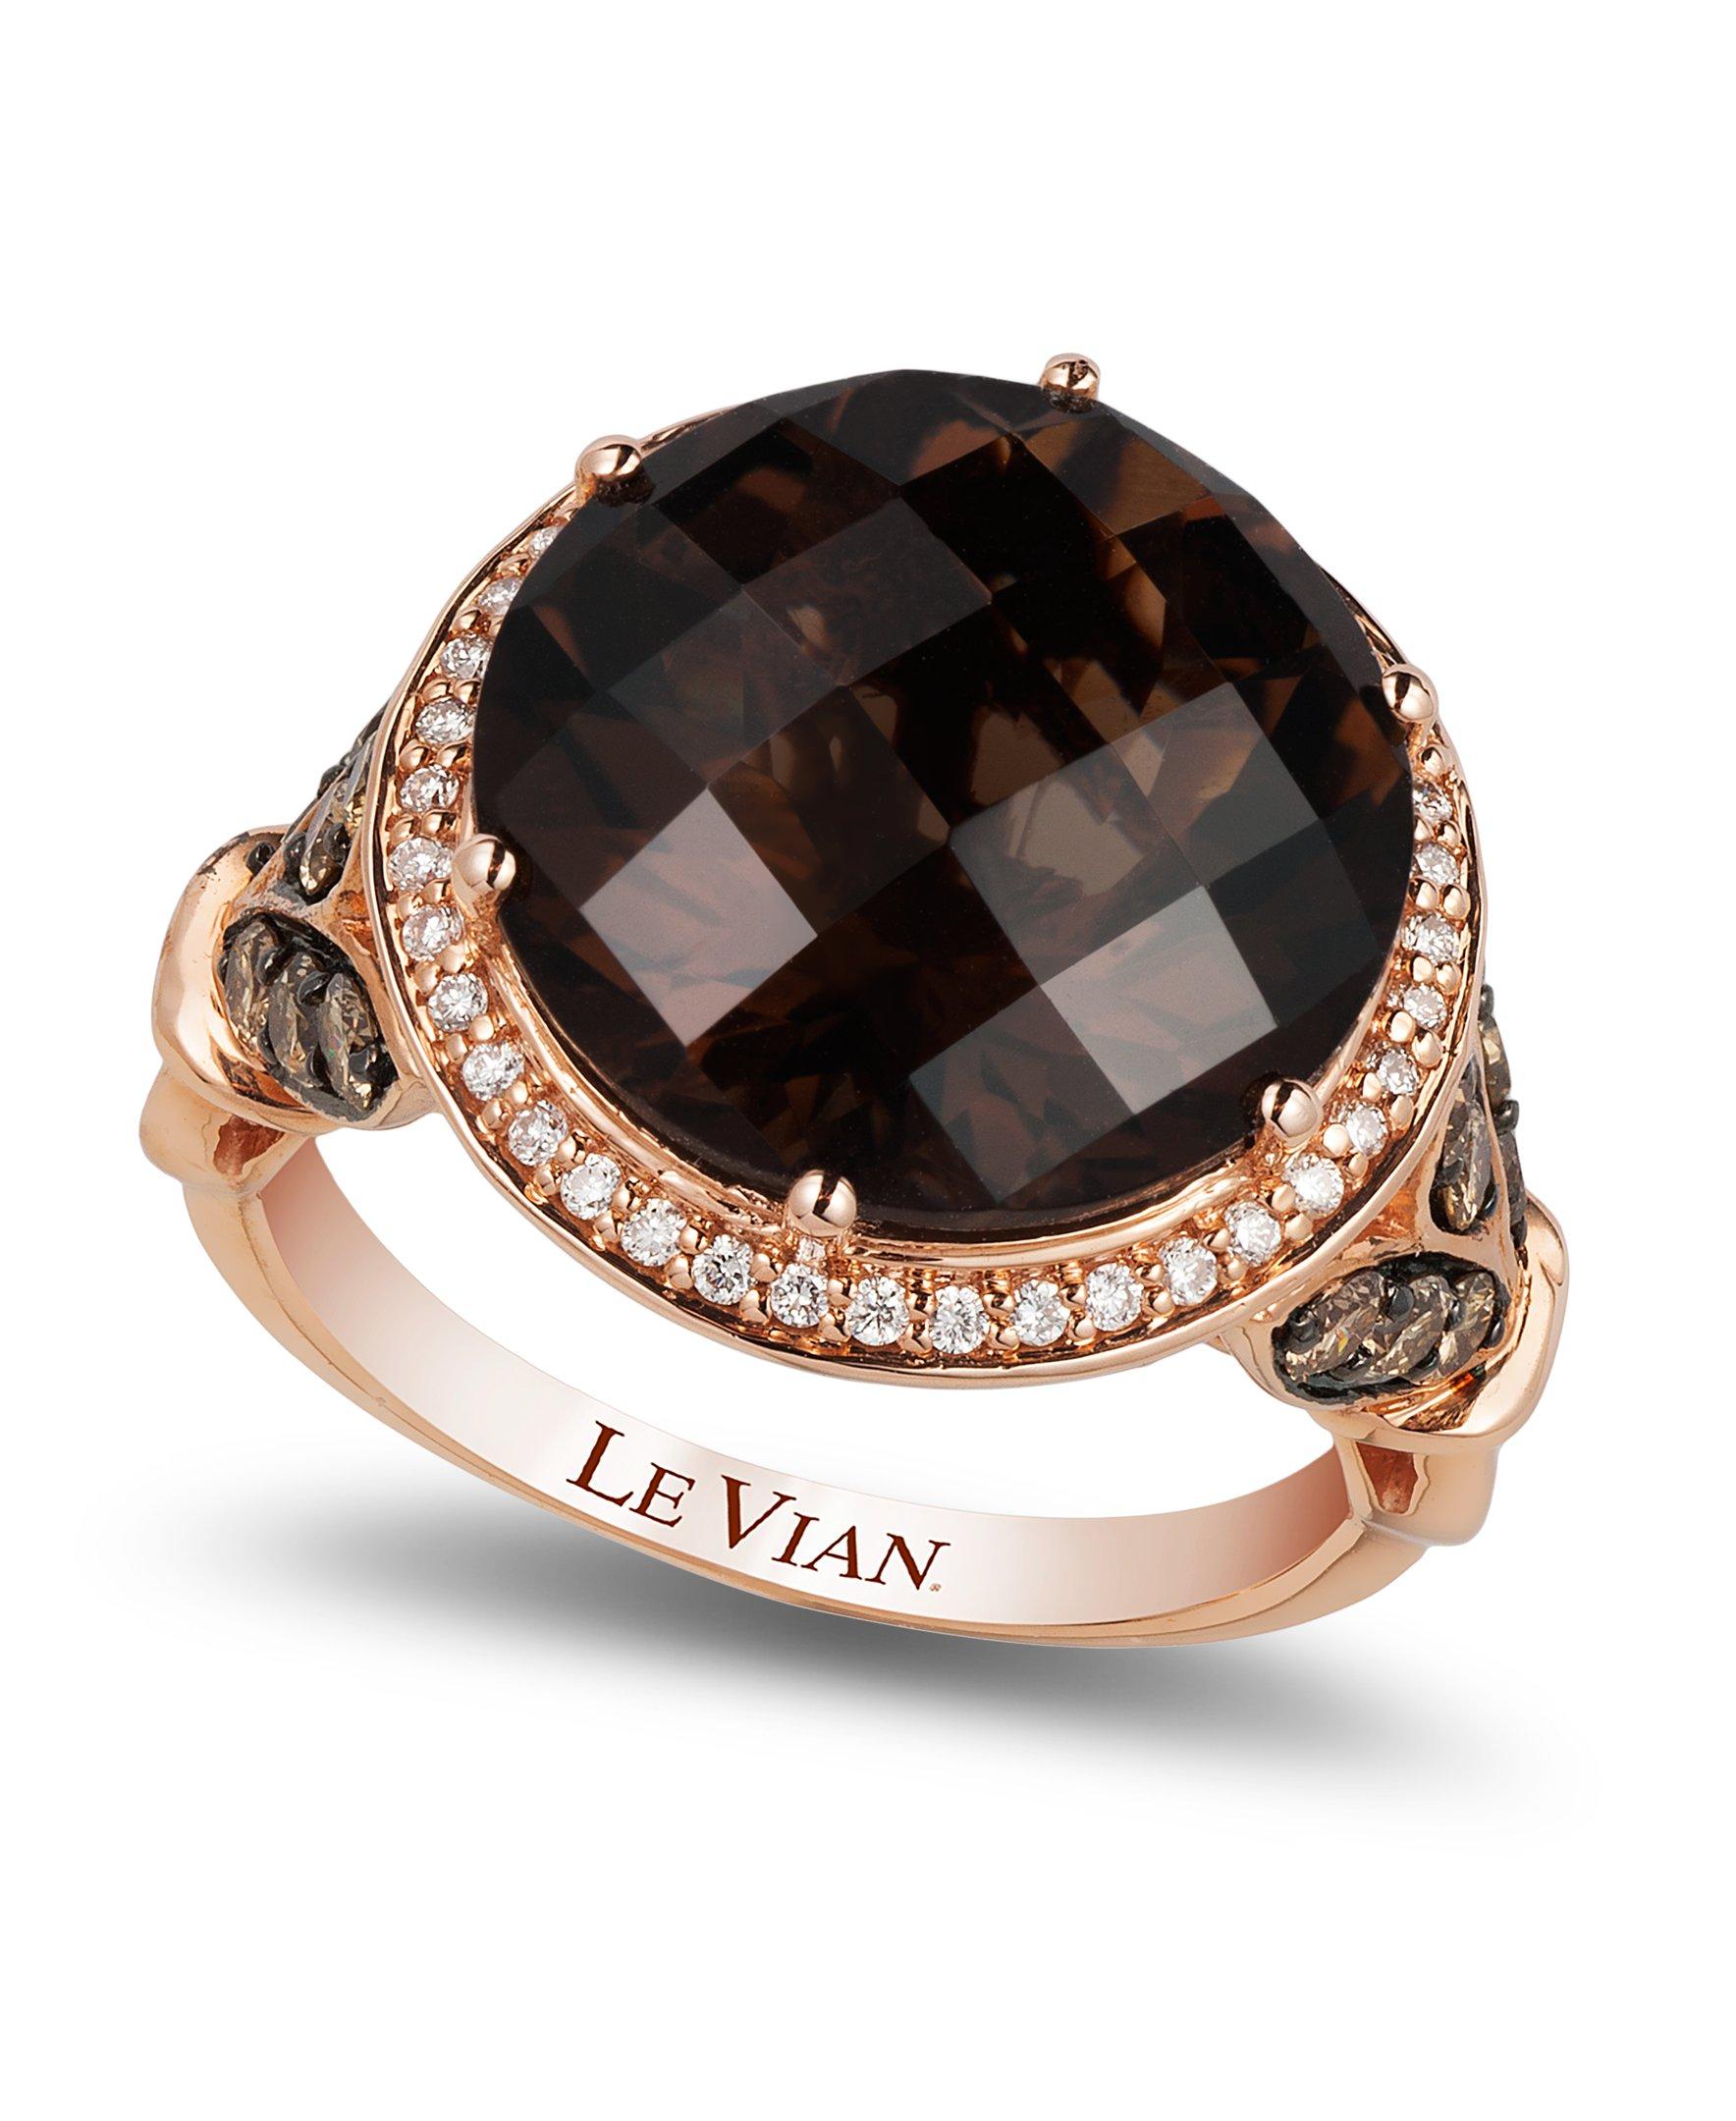 LeVian 14K Rose Gold Smoky Quartz Round Chocolate Brown Diamond Classy Halo Ring
